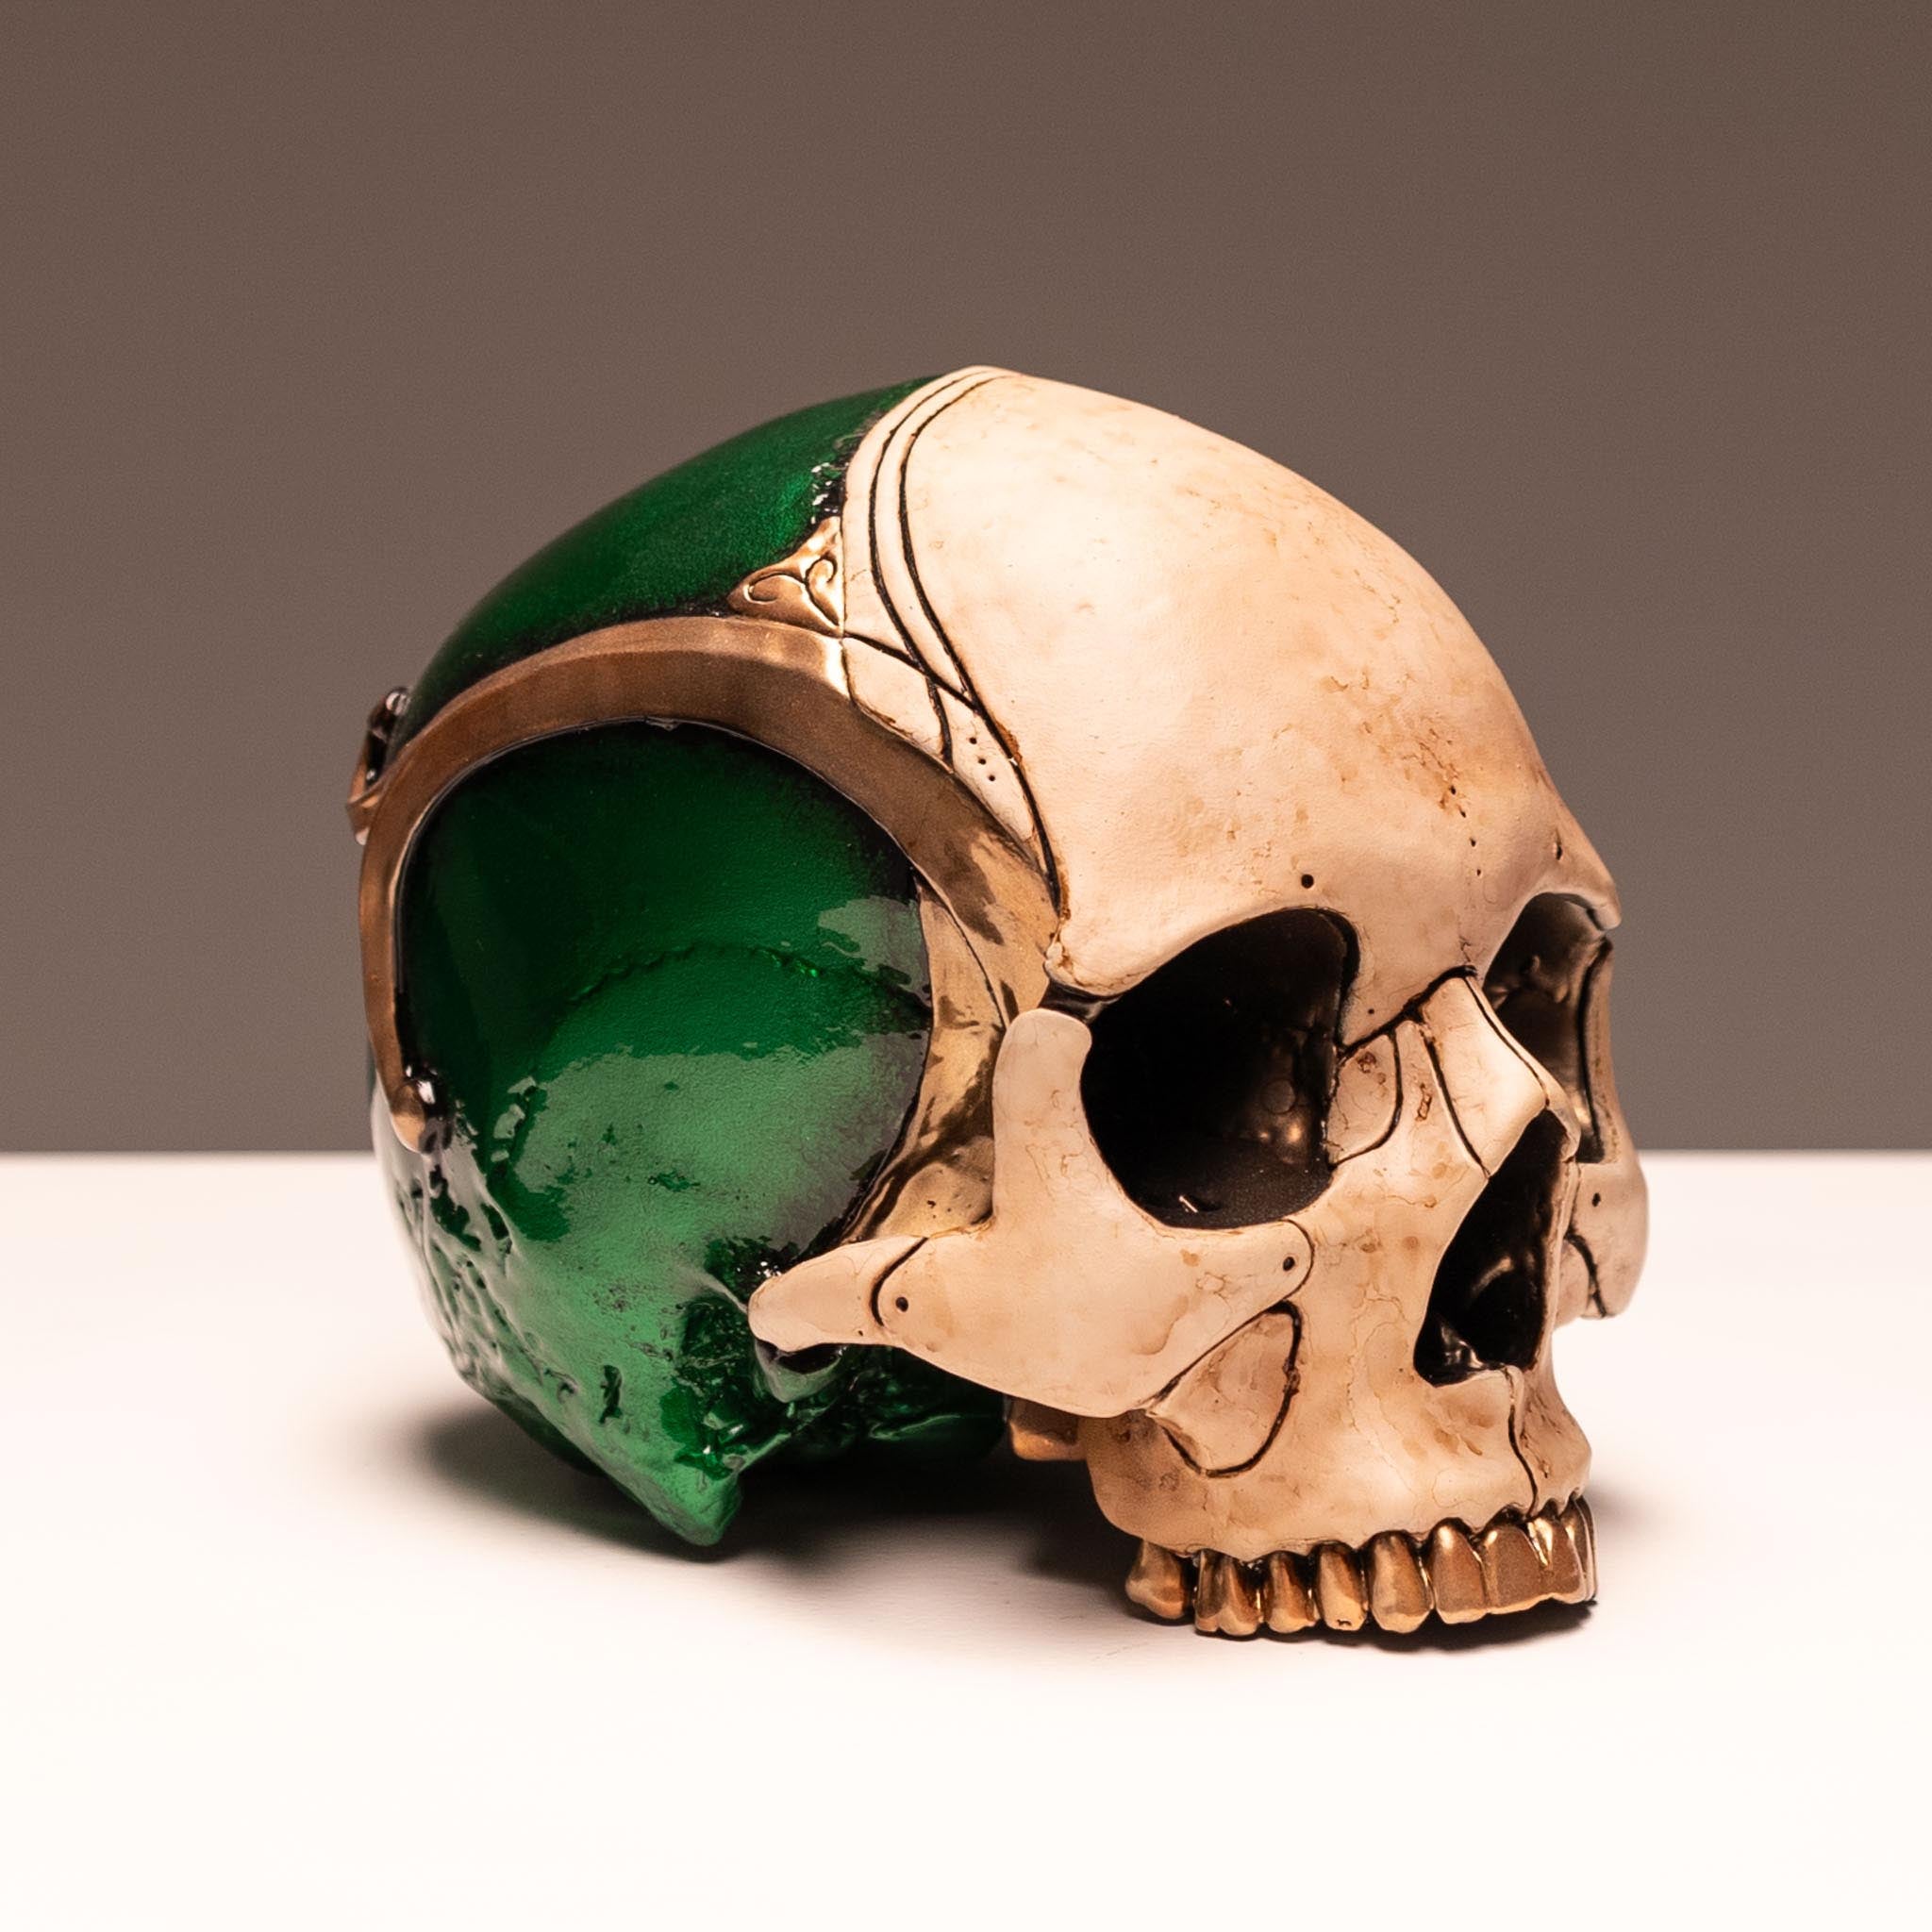 Loki skull